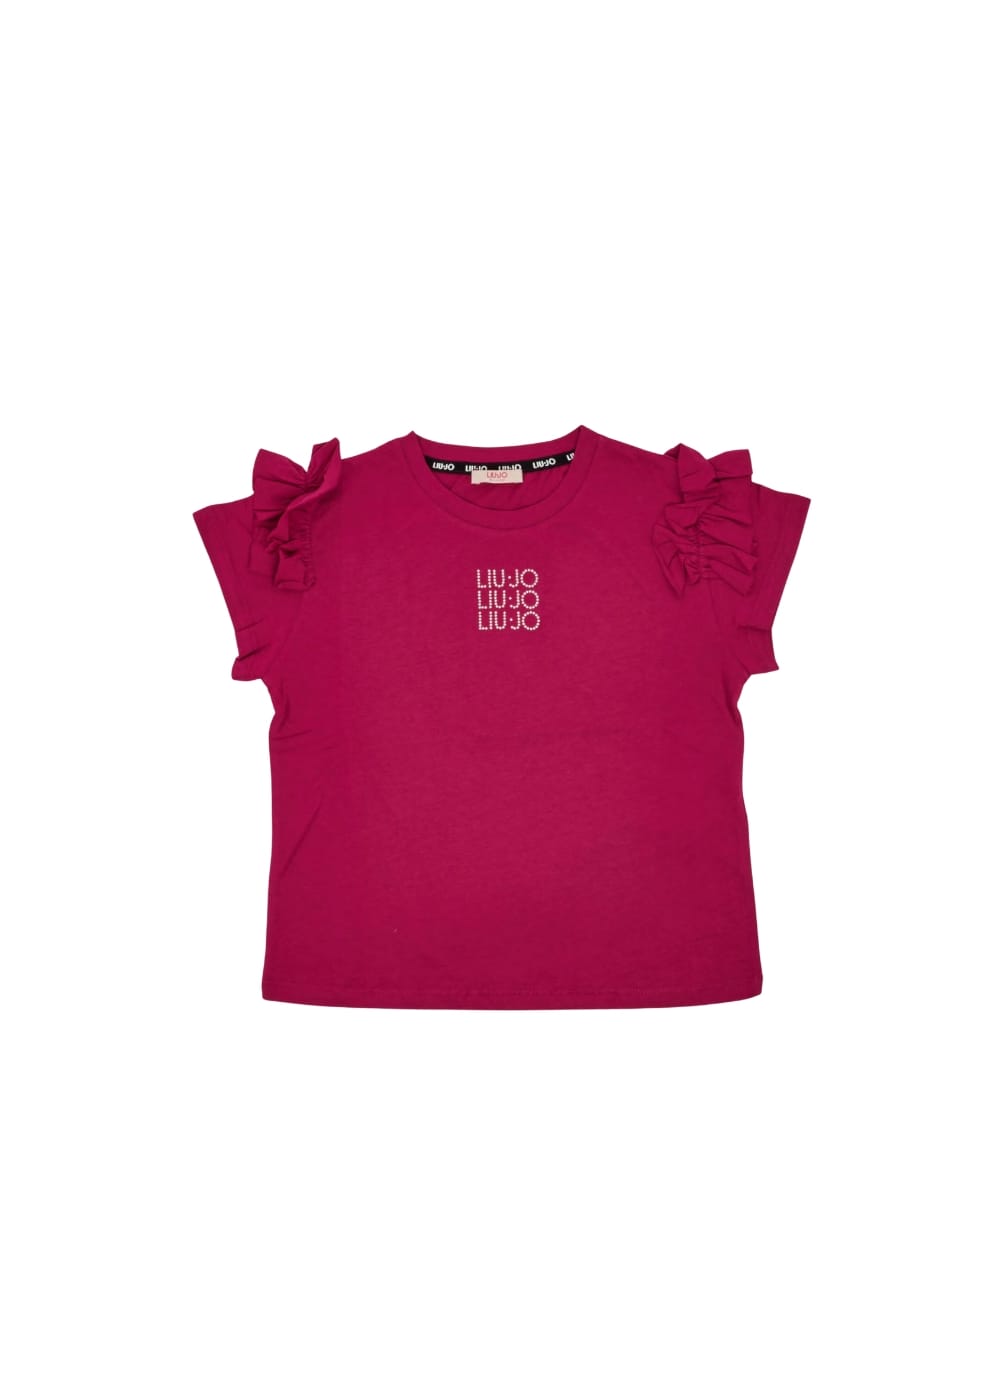 Featured image for “Liu Jo T-Shirt con Logo”